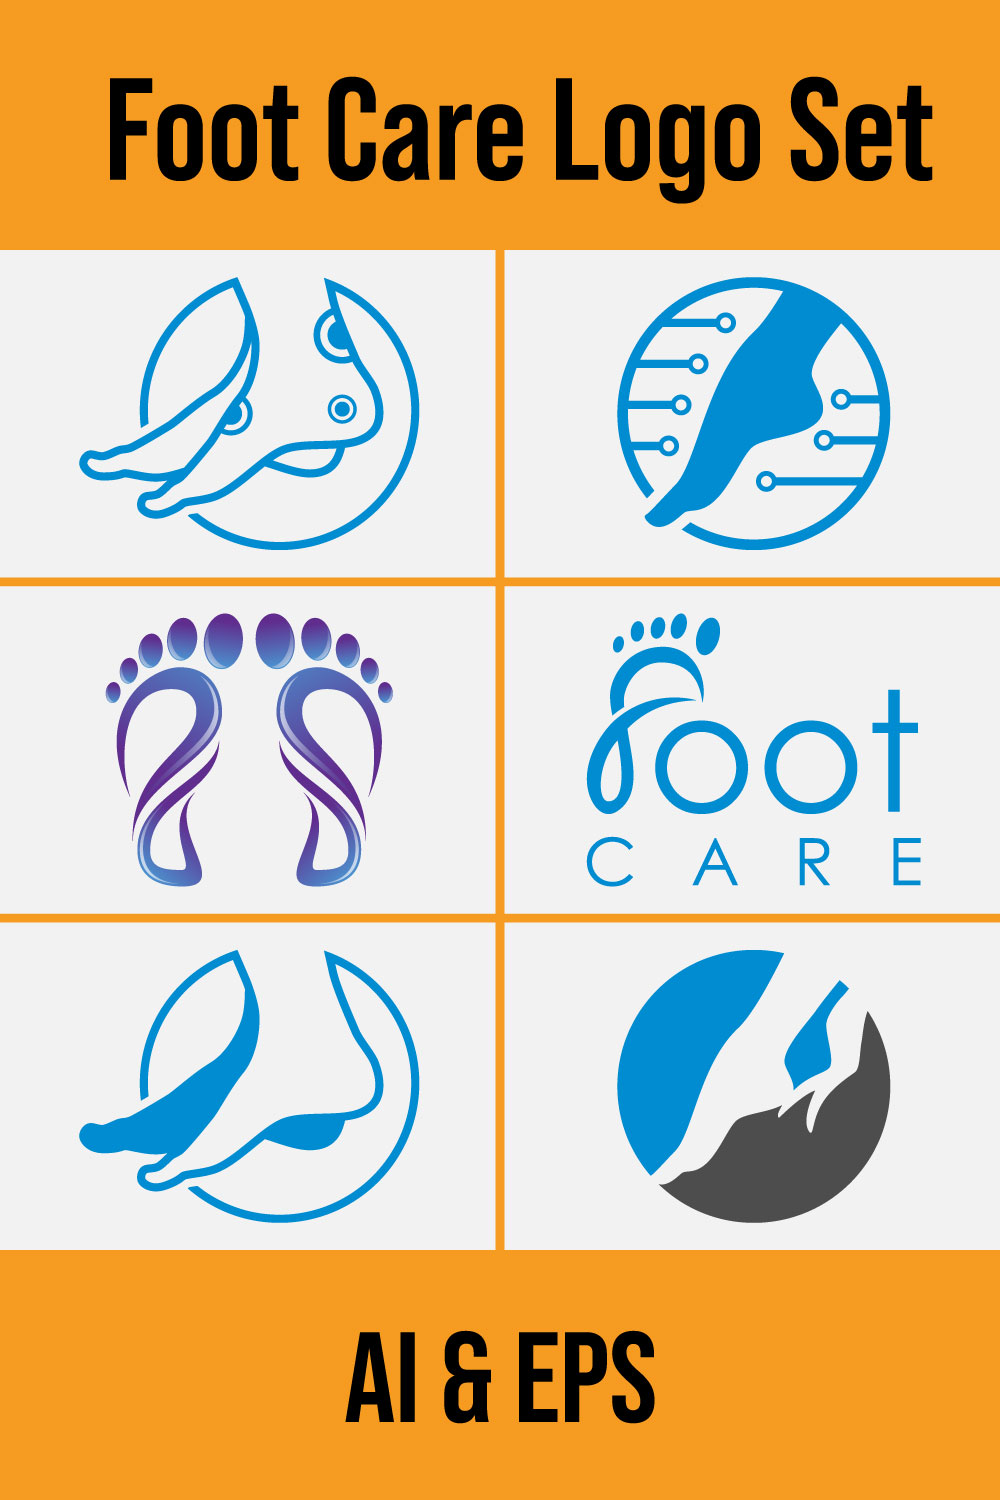 Foot Care Logo Design pinterest image.